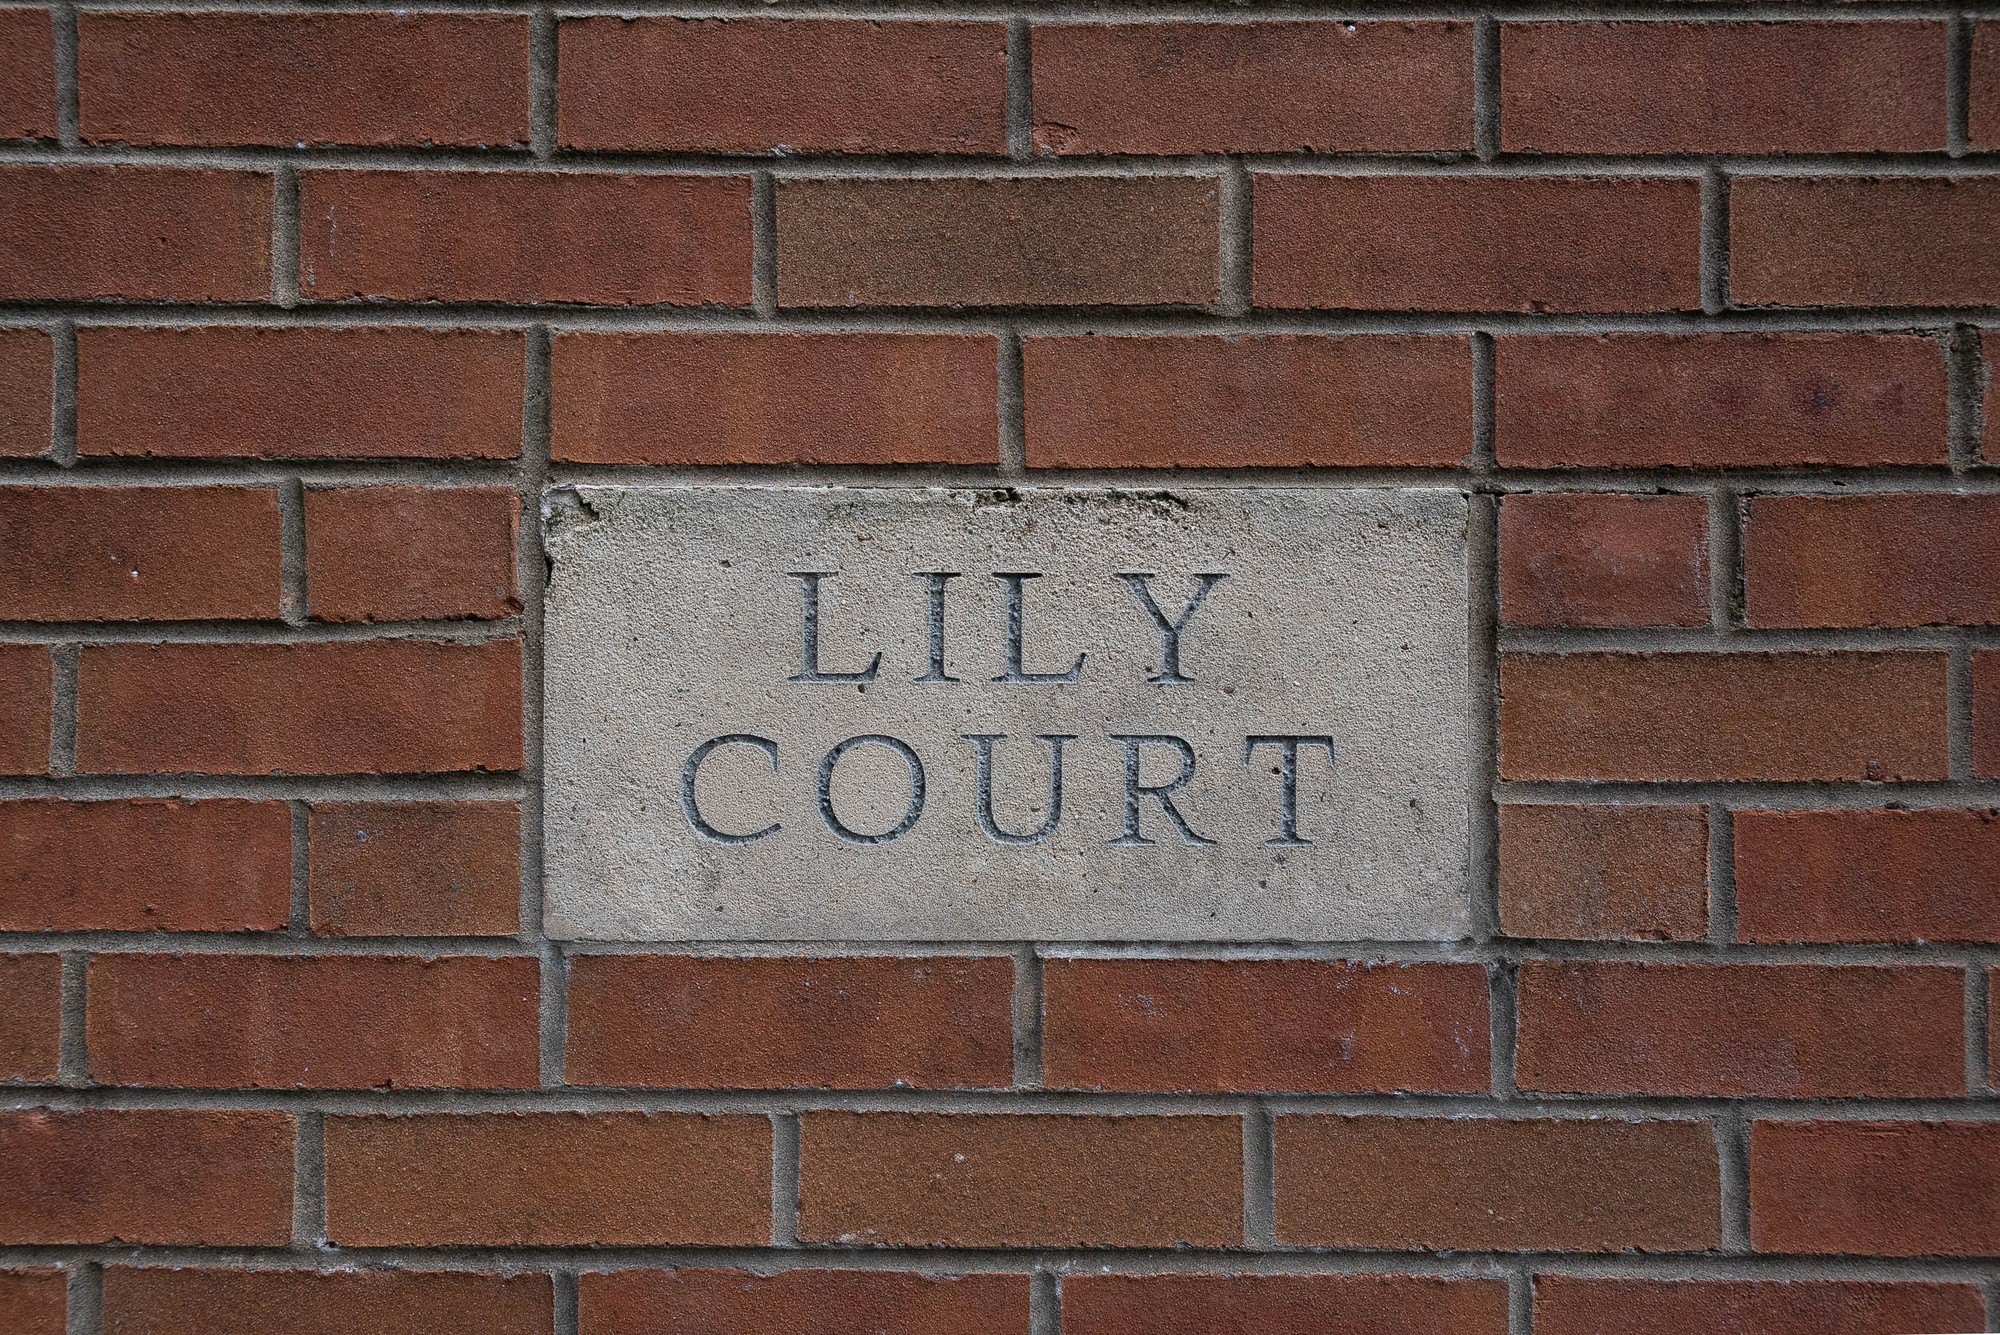 Apartment 3 Lily Court 14a Deramore Park South